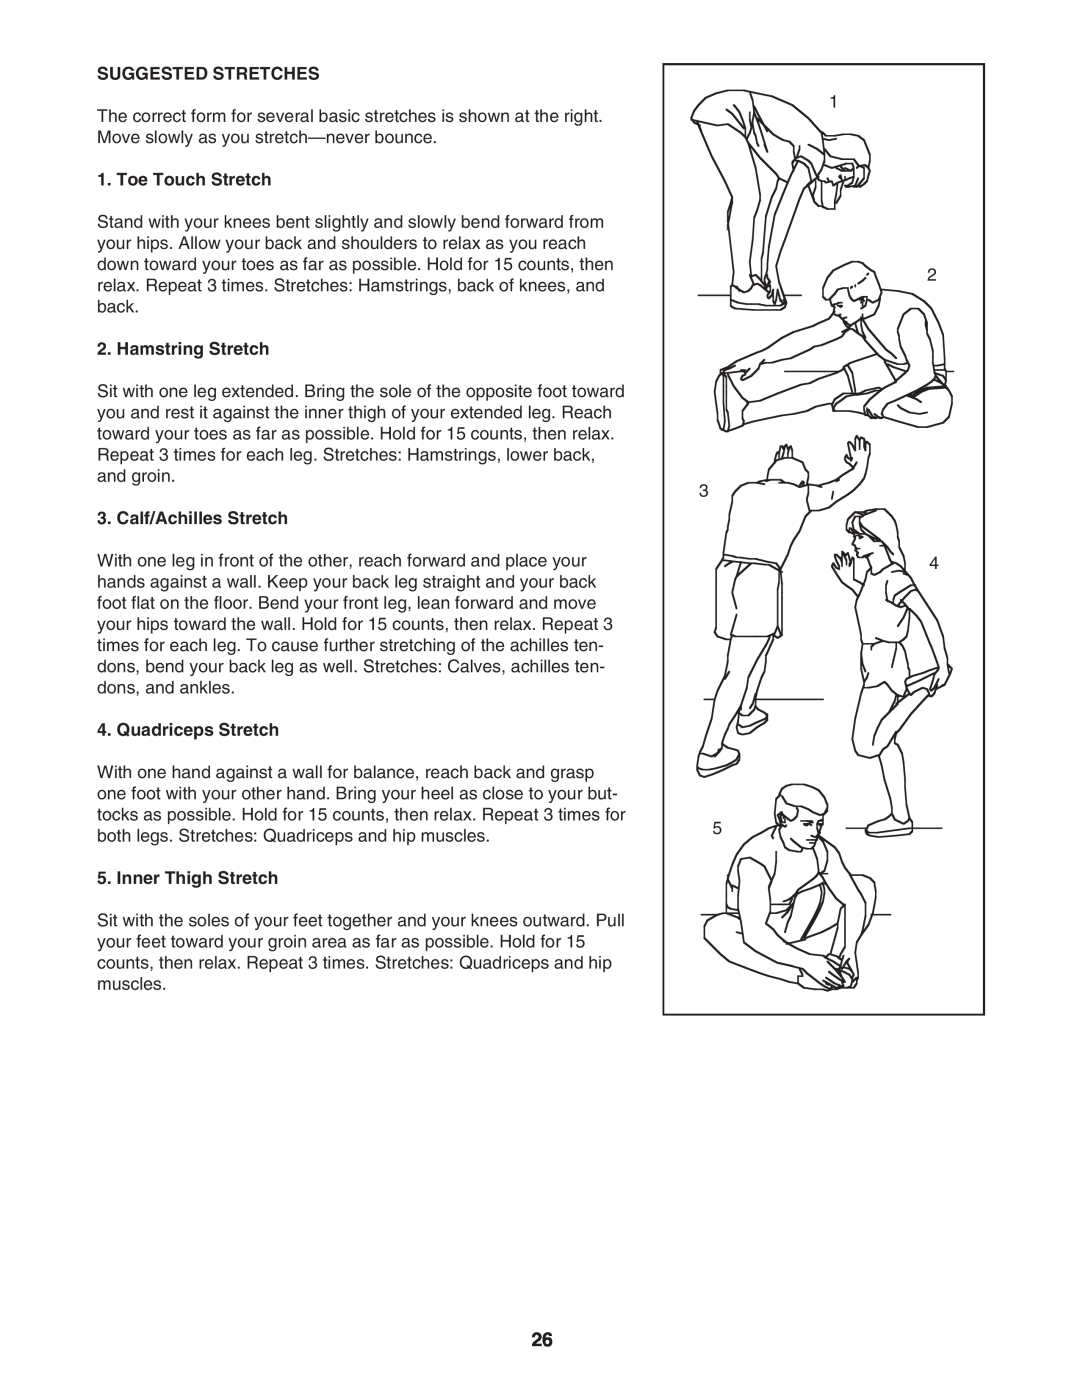 ProForm DTL4495C.0 Suggested Stretches, Toe Touch Stretch, Hamstring Stretch, Calf/Achilles Stretch, Quadriceps Stretch 